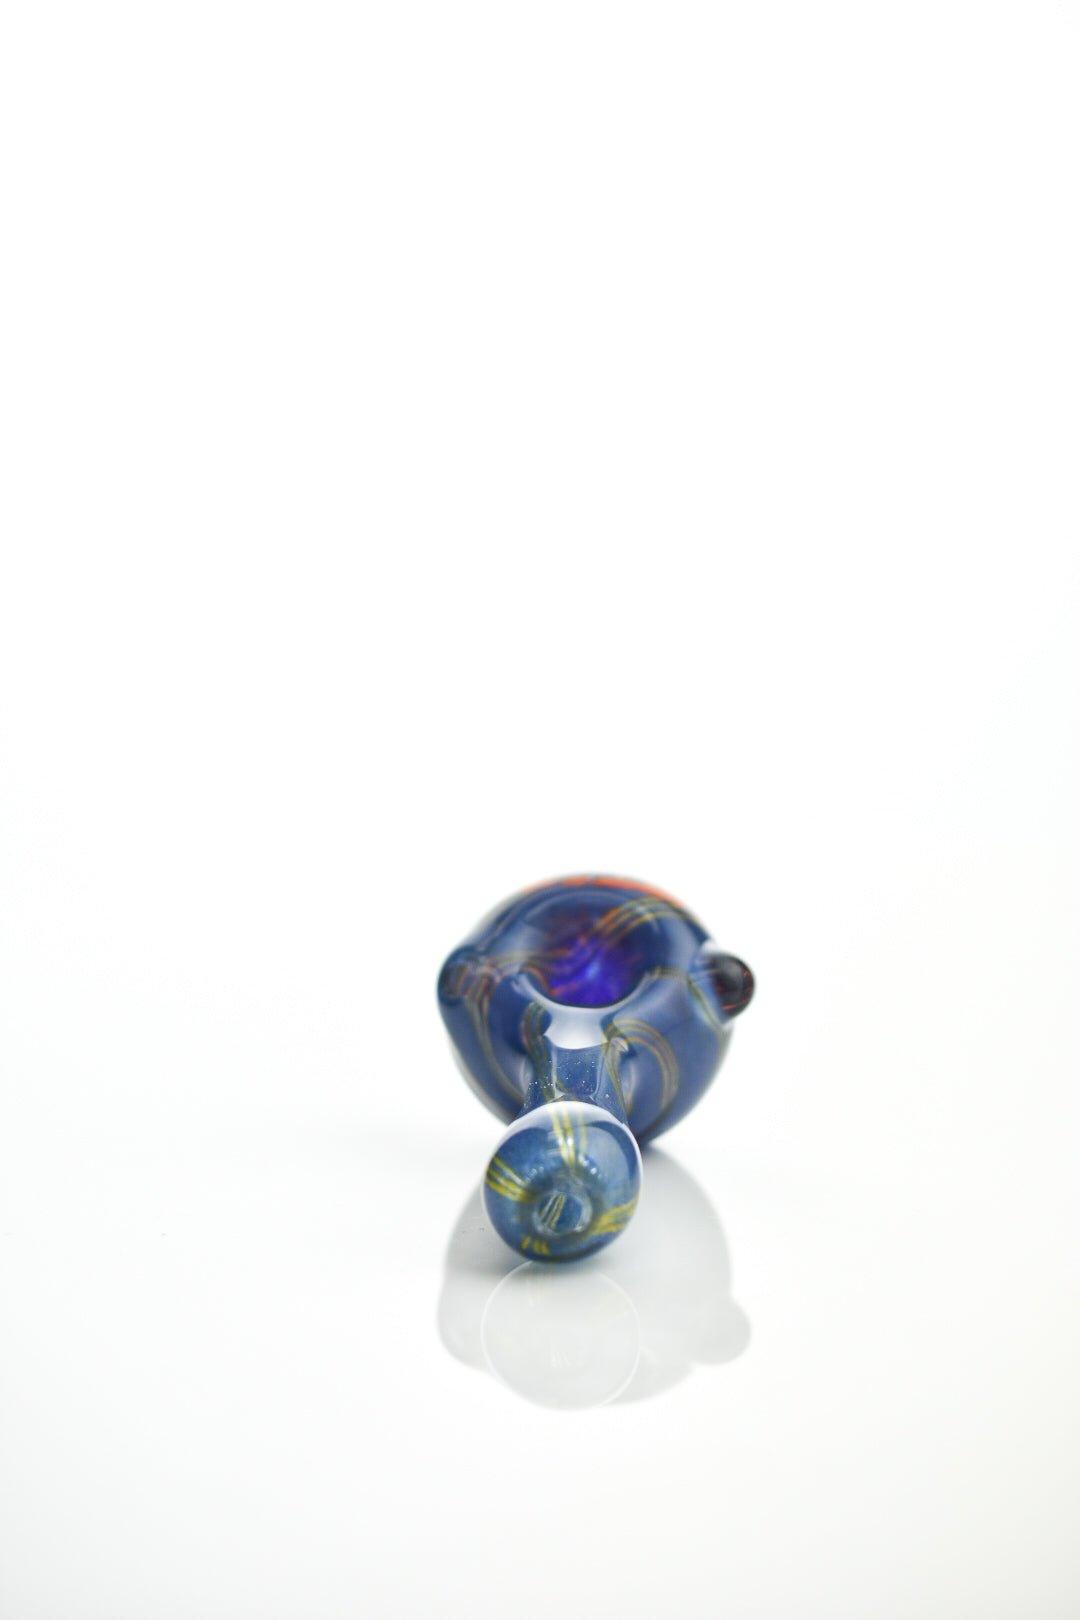 Hoffman Glass mini Caesar Blue - Smoke Spot Smoke Shop